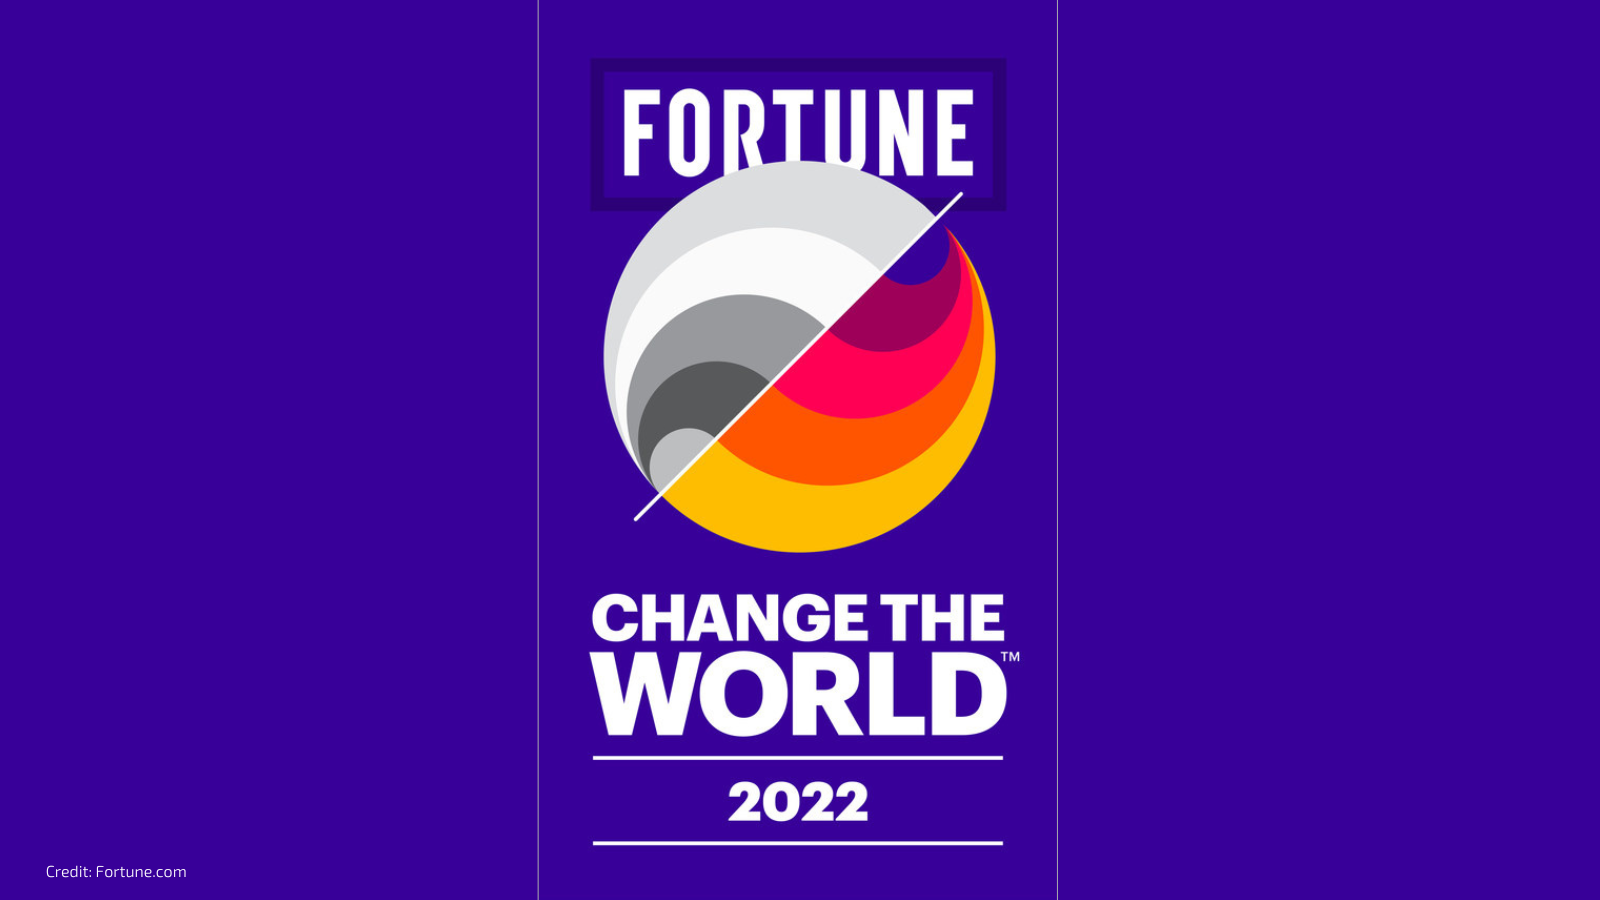 Fortune Change the World 2022 logo.